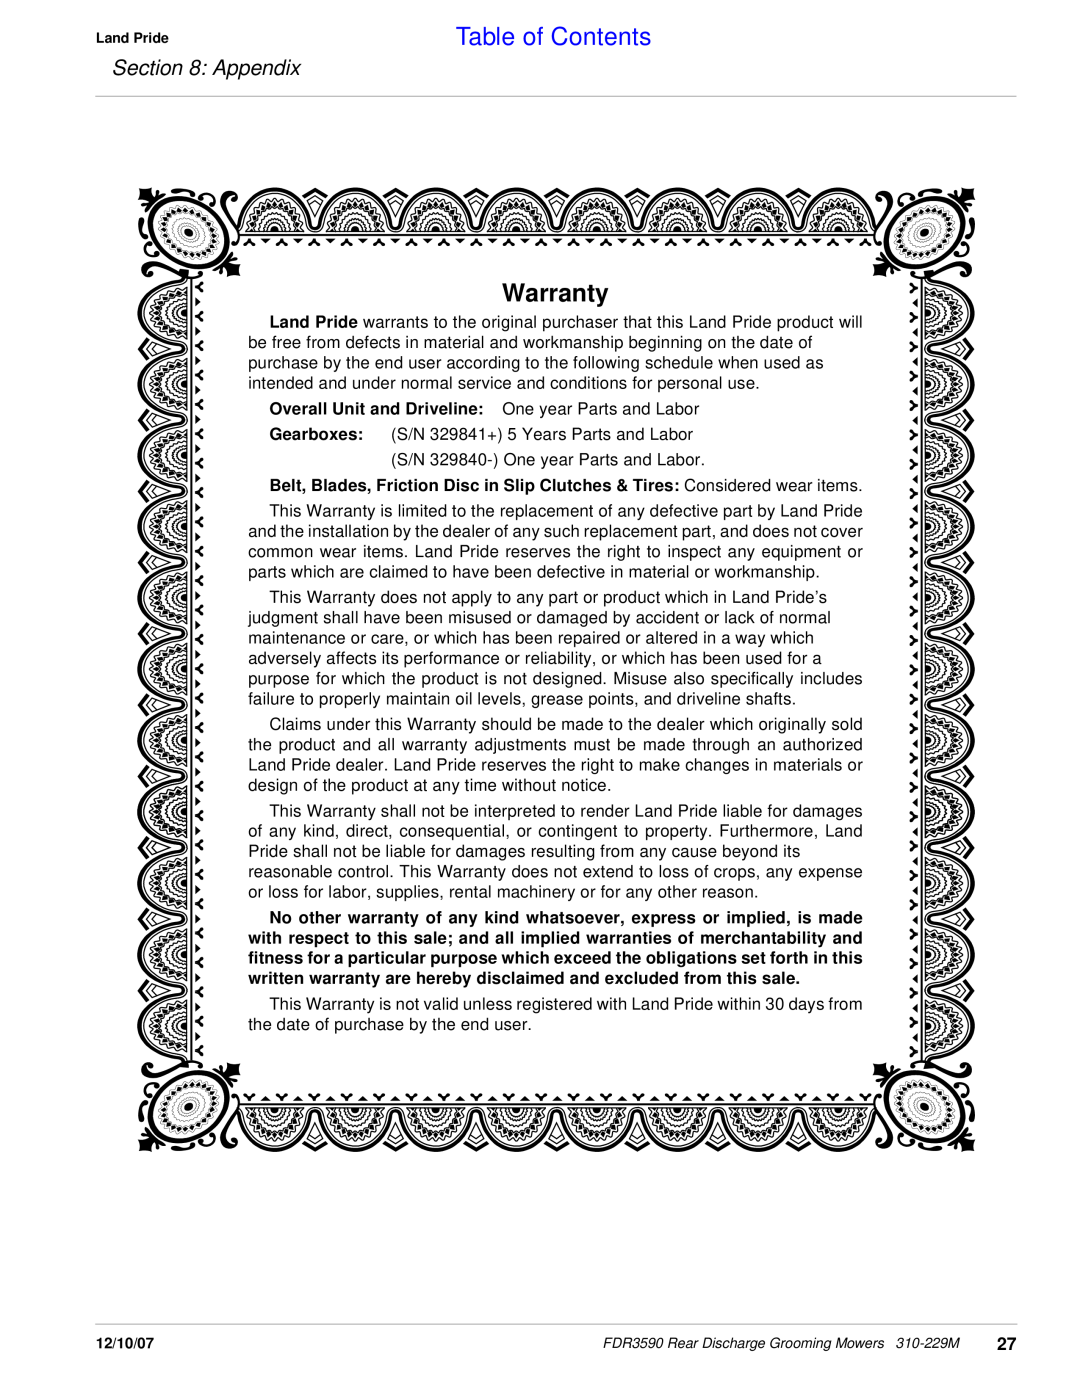 Land Pride FDR3590 manual Warranty, Table of Contents, Appendix 